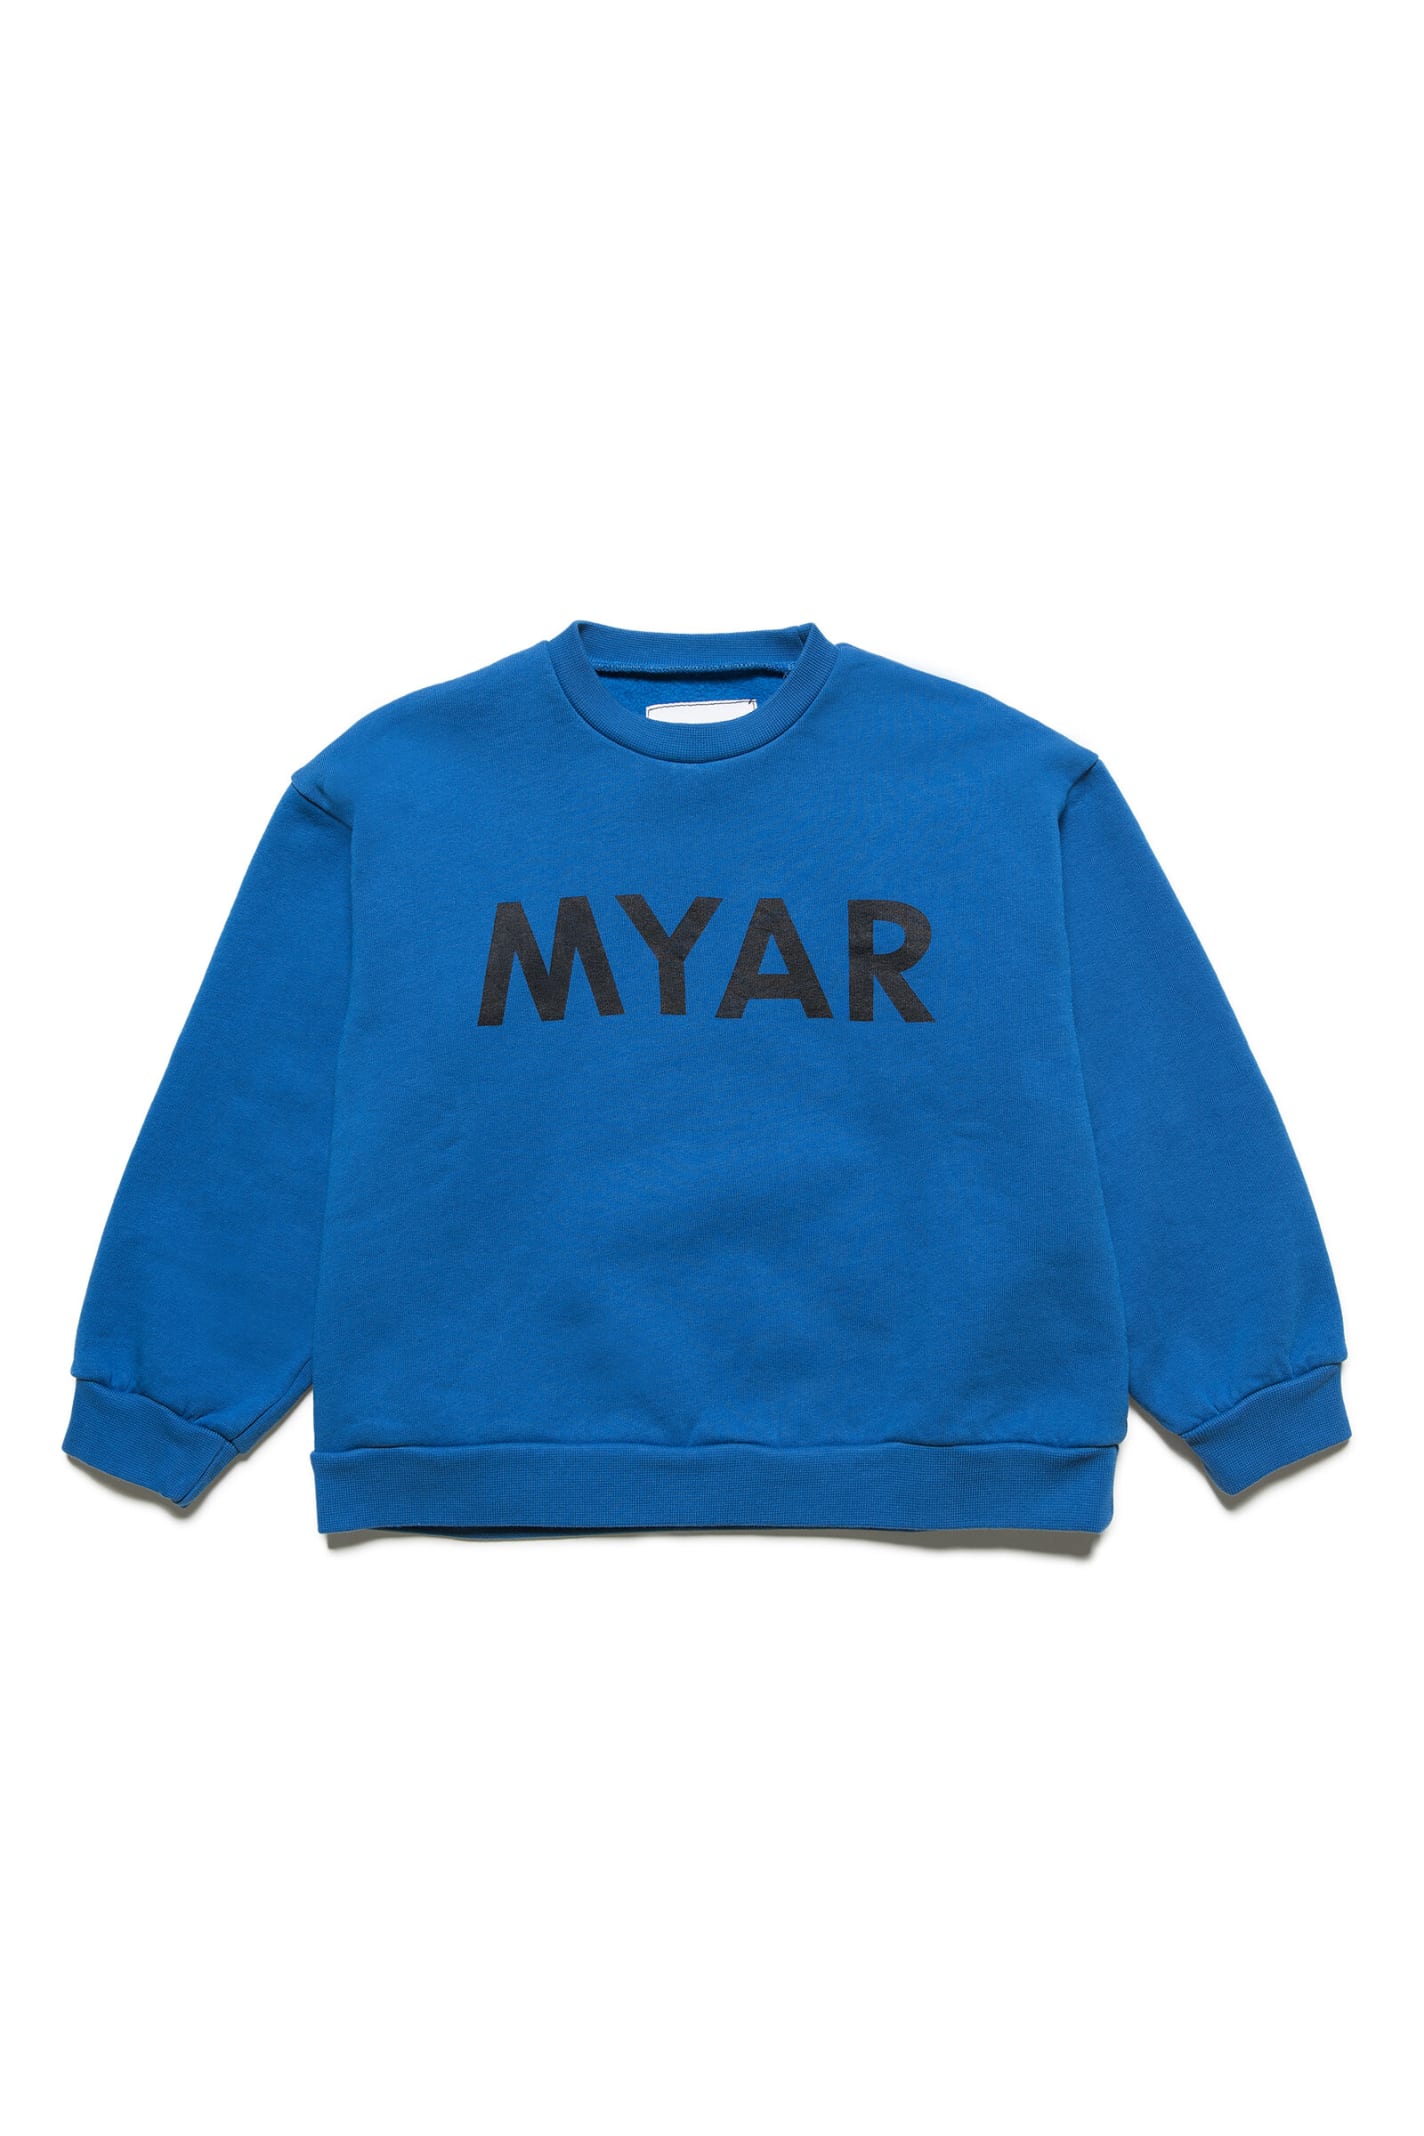 MYAR Mys2u Sweat-shirt Myar